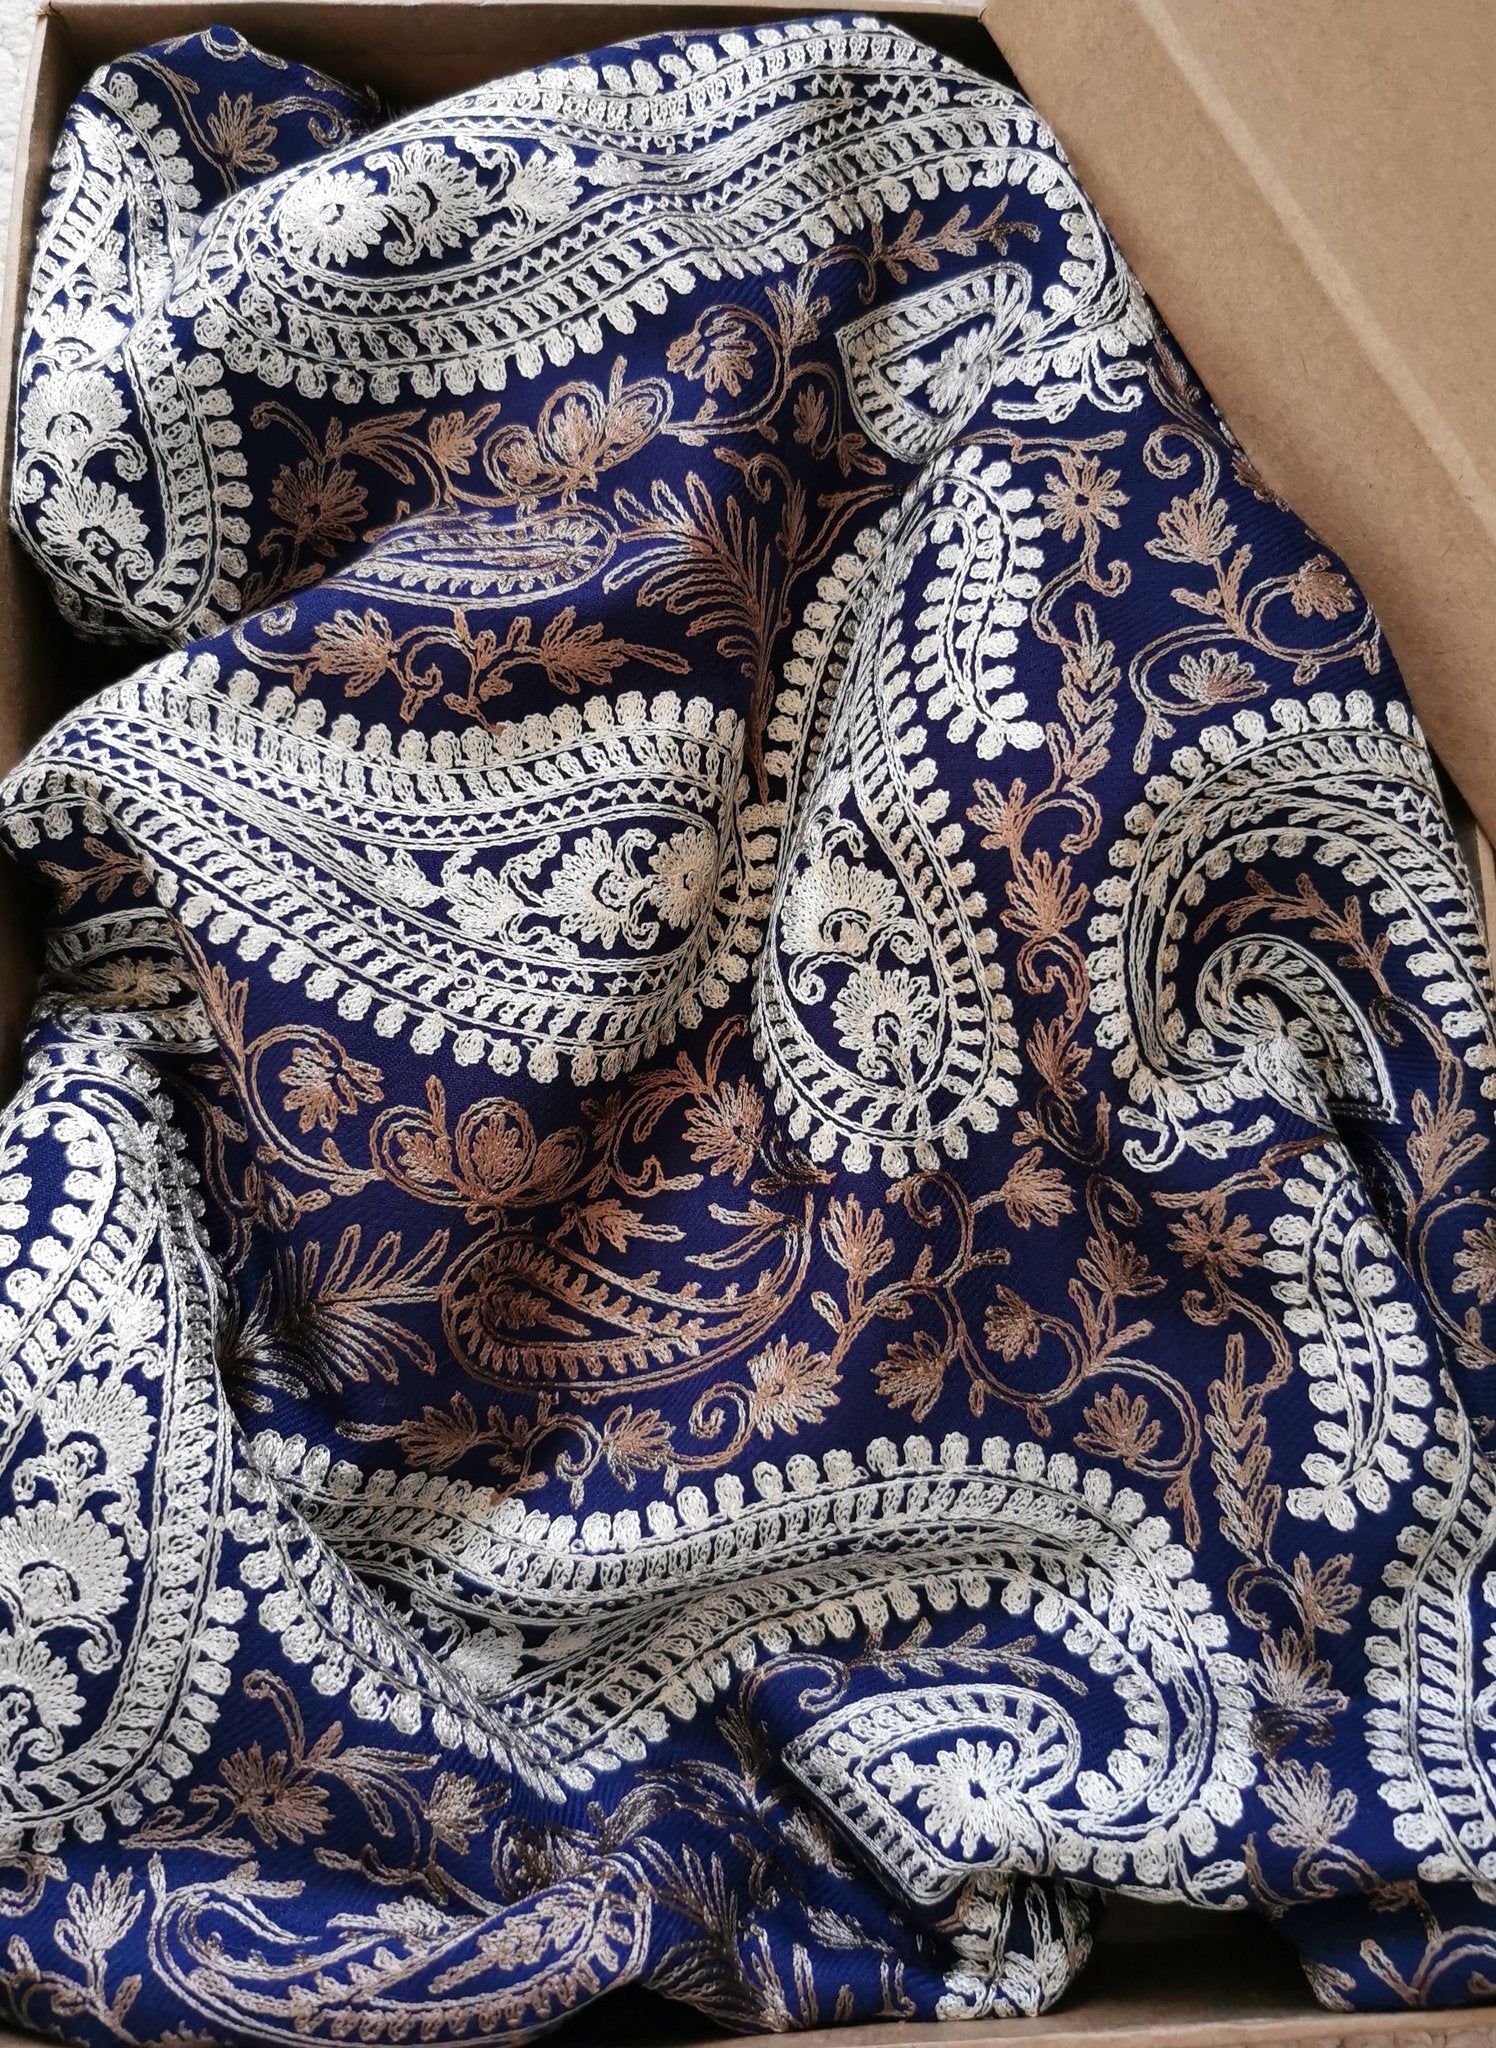 Blue nalki embroidered shawl